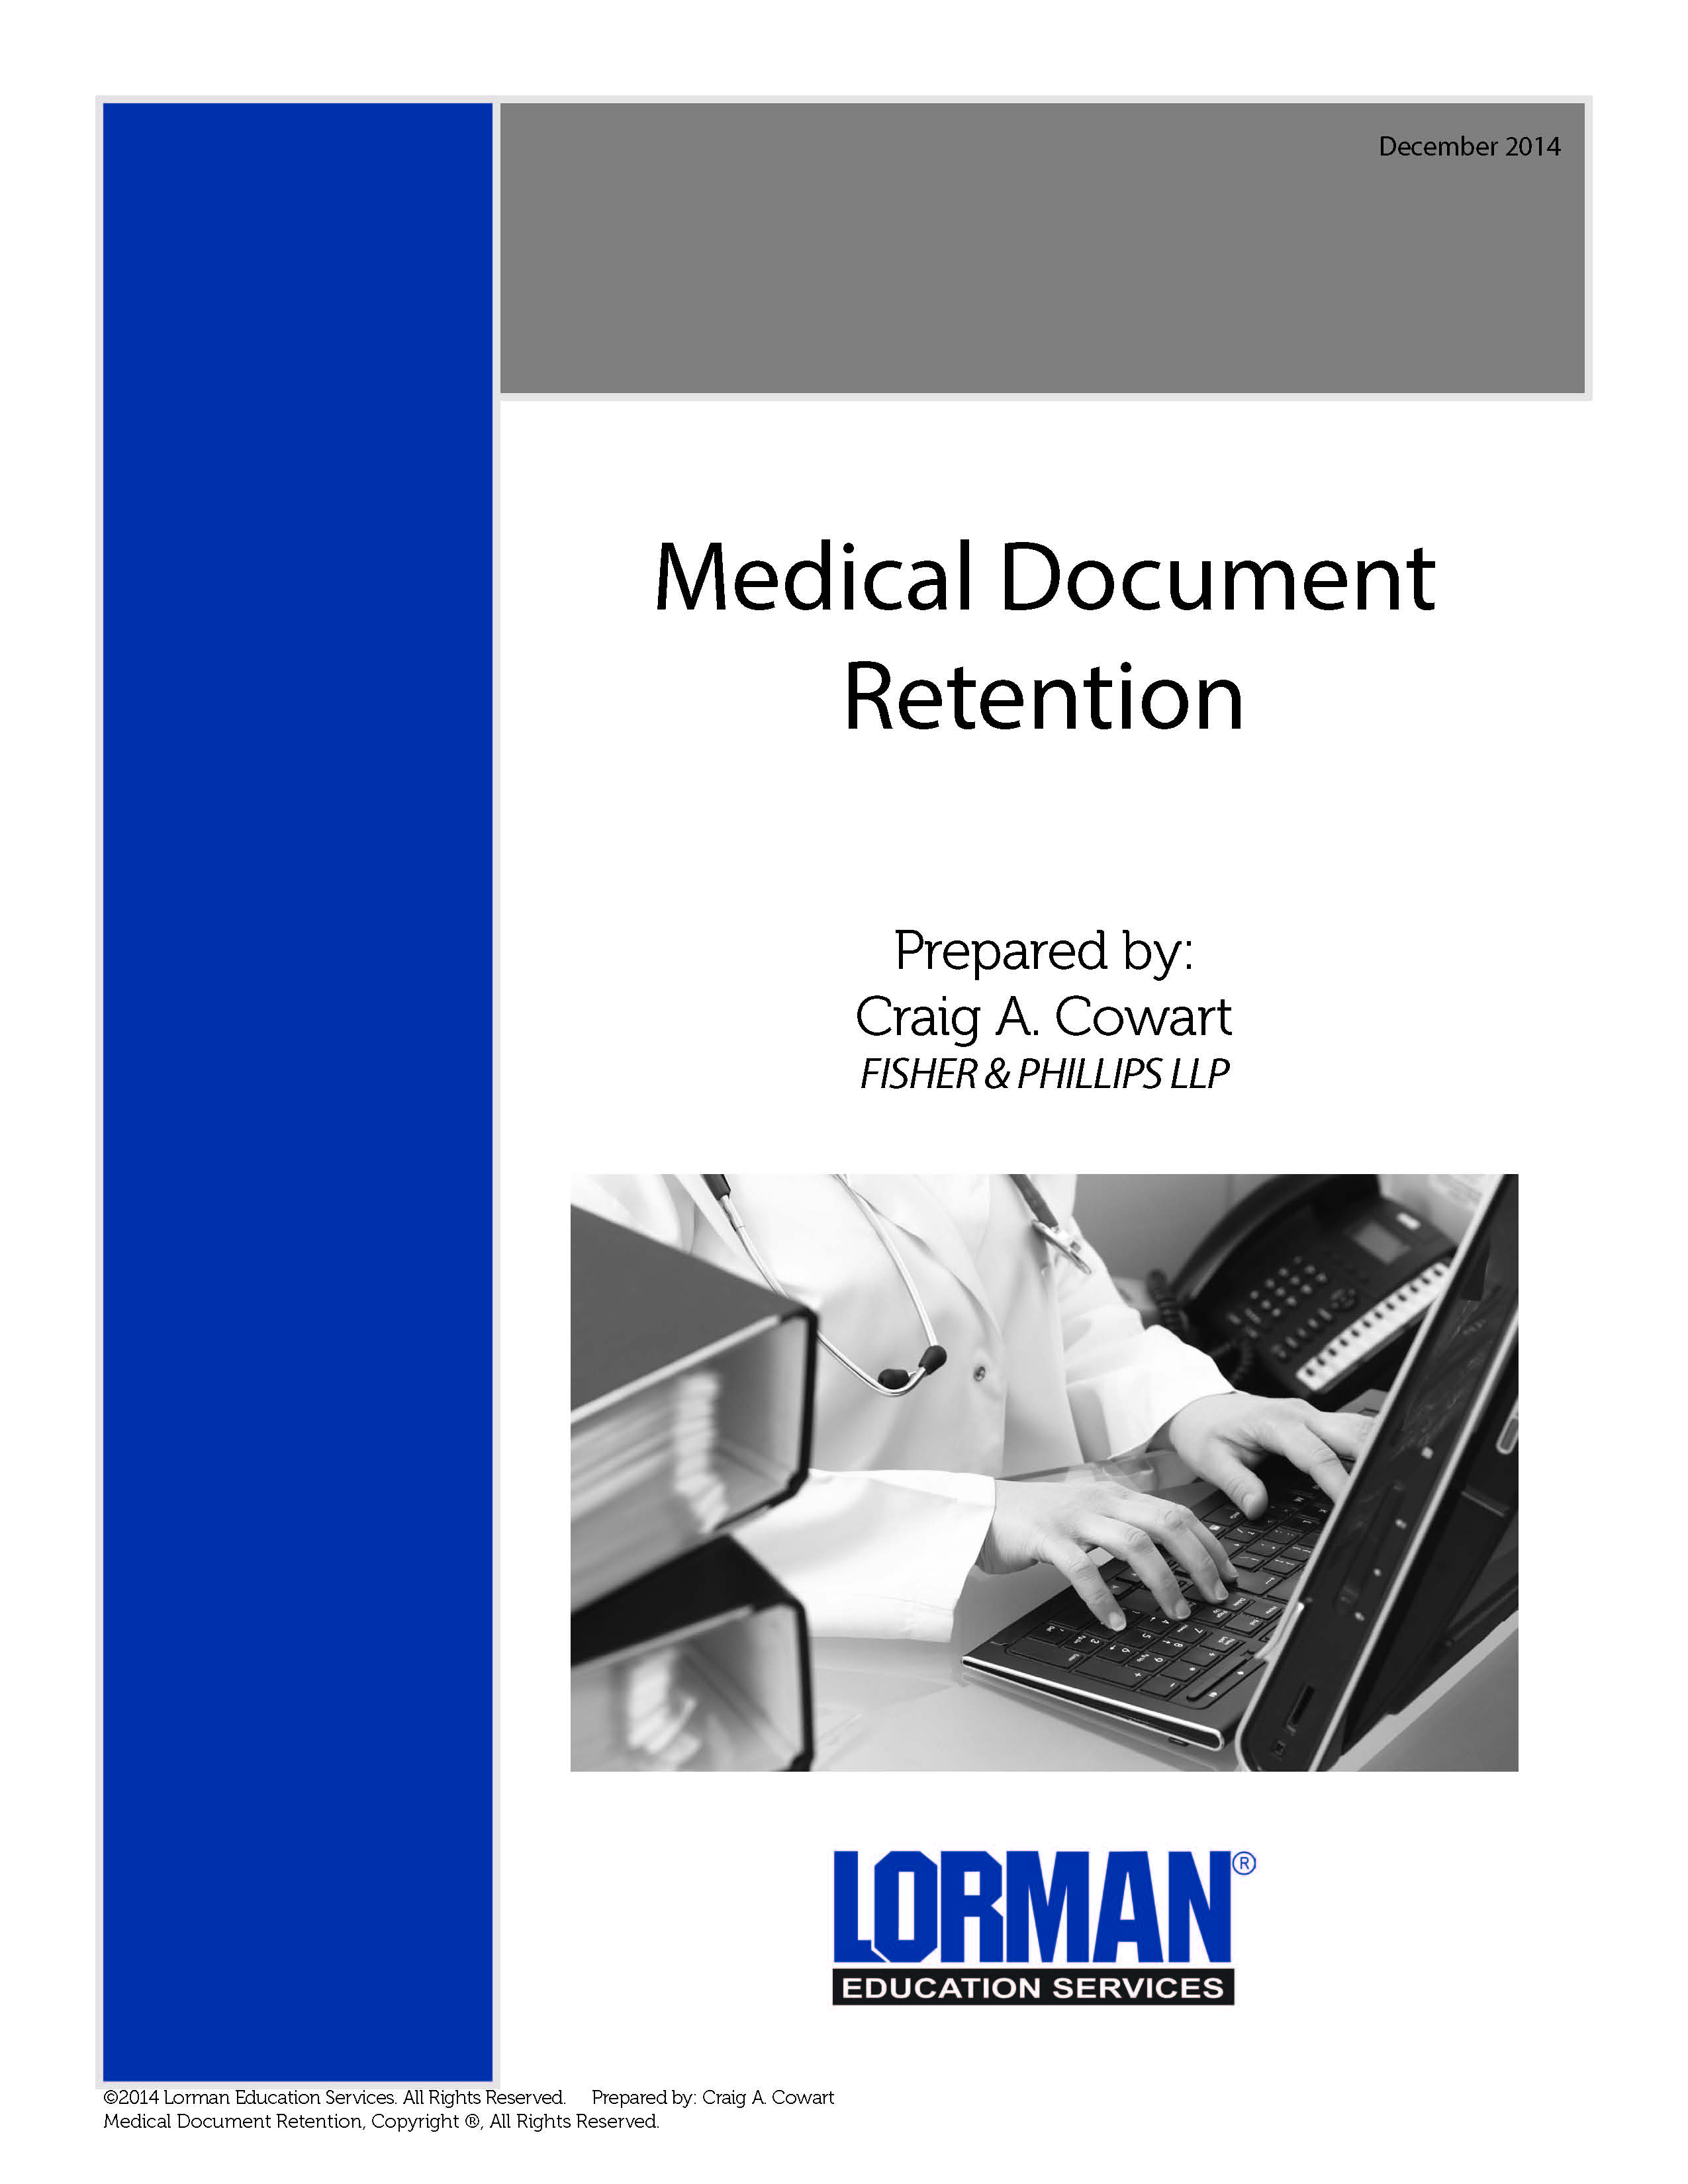 Medical Document Retention